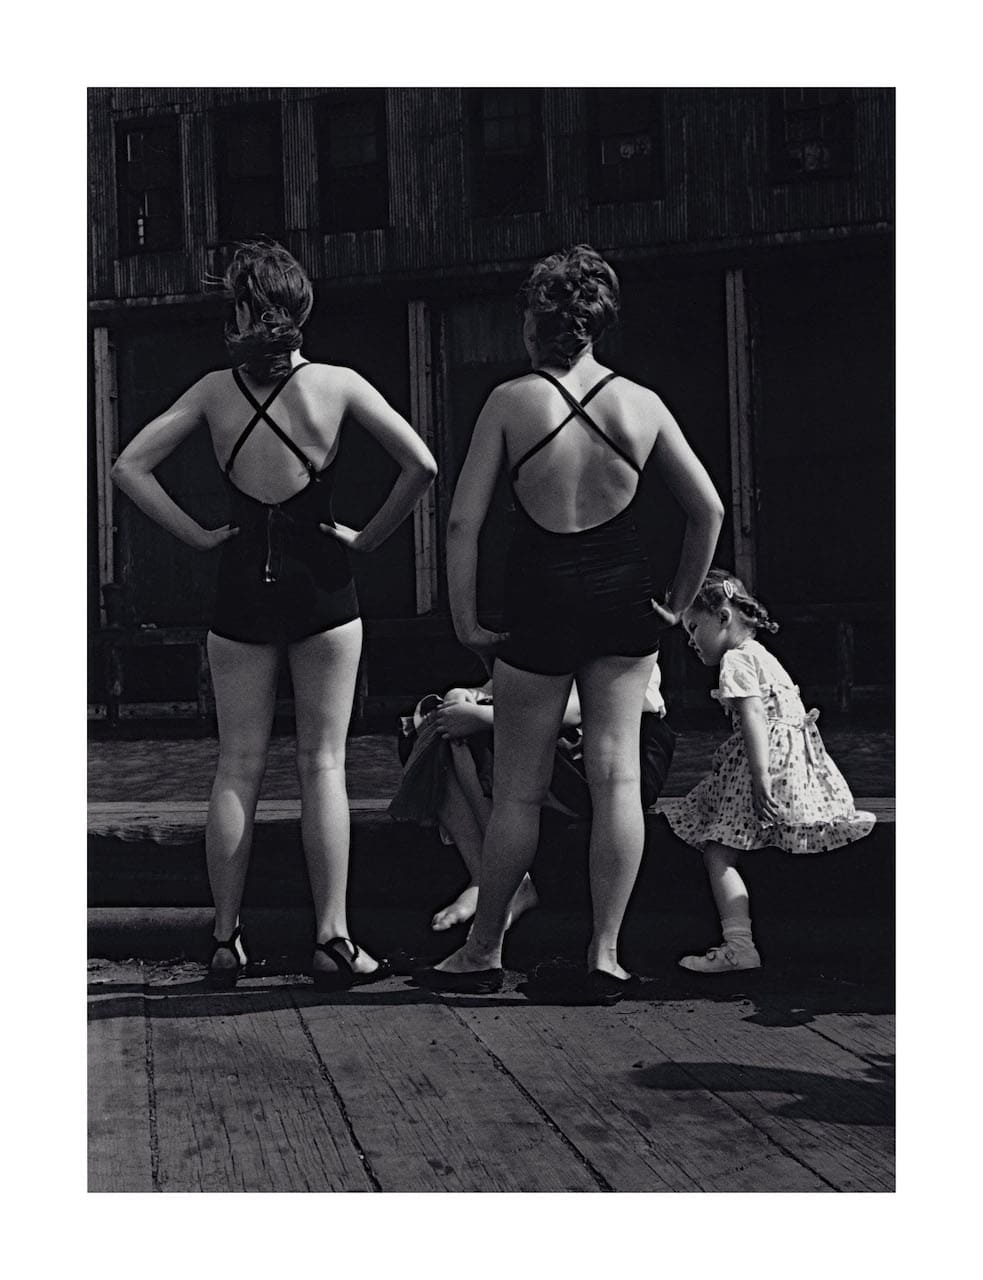 Ruth Orkin, Two Women in Bathing Suits, Gansevoort Pier, New York City, 1948, Vintage print © Ruth Orkin Photo Archive